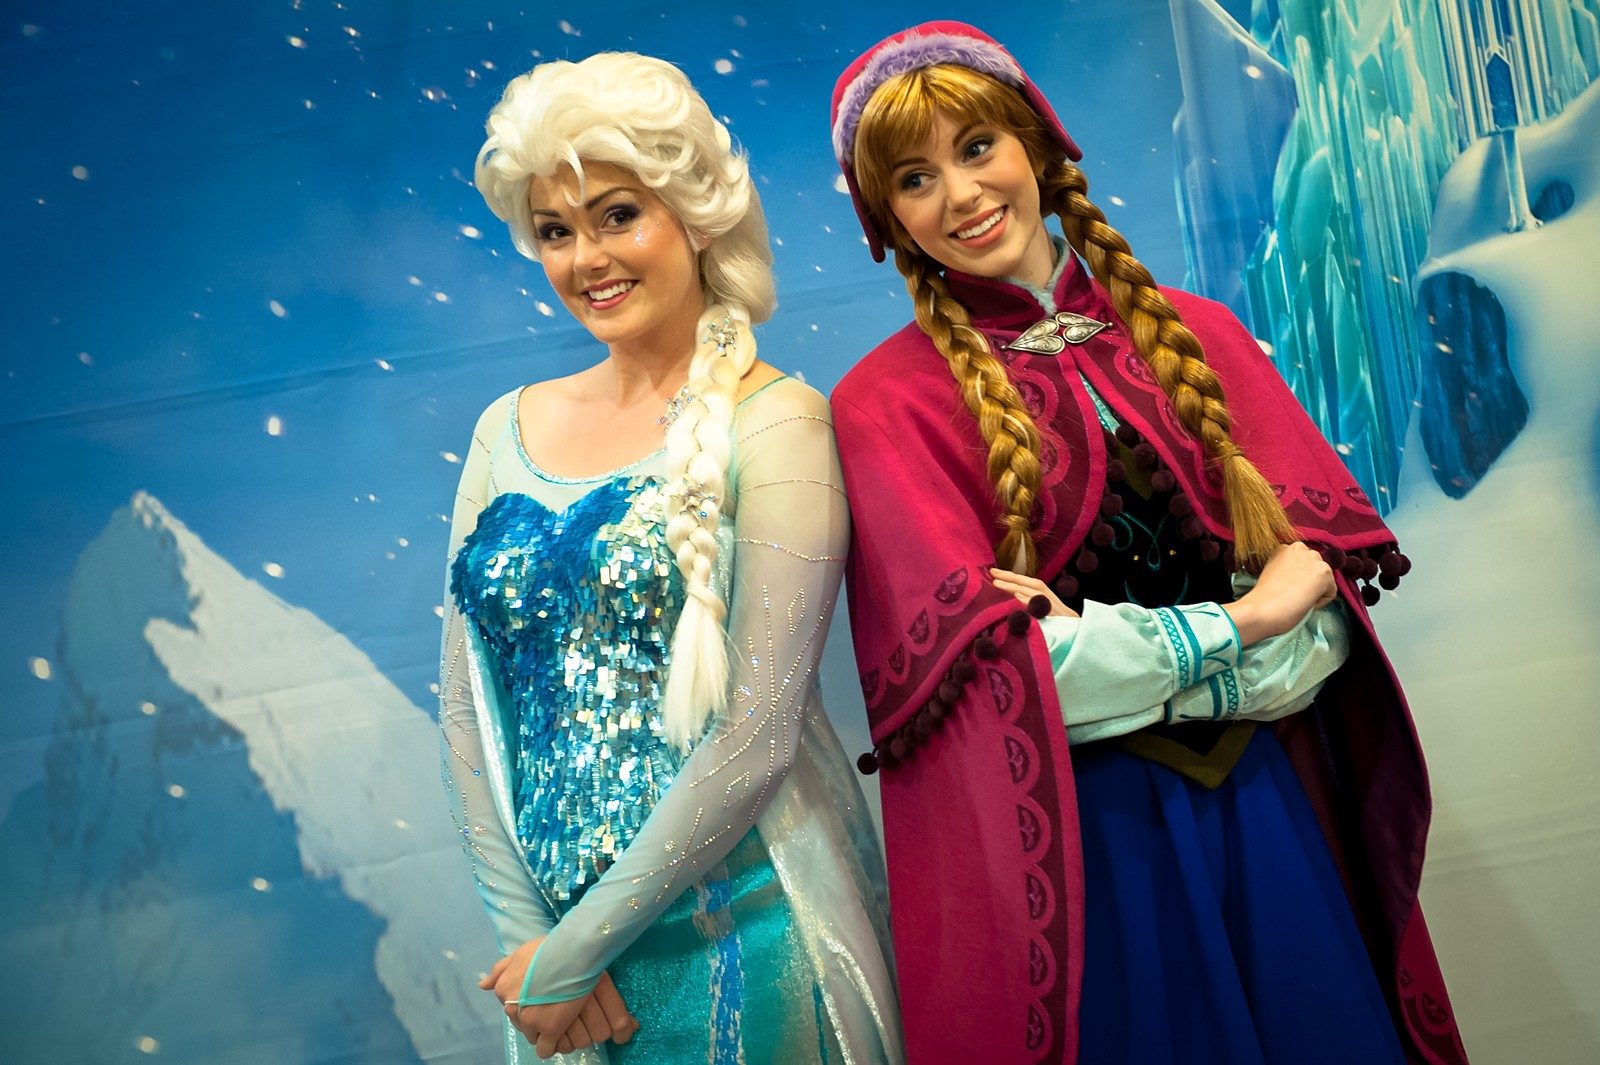 Elsa and Anna Disney Frozen character actresses